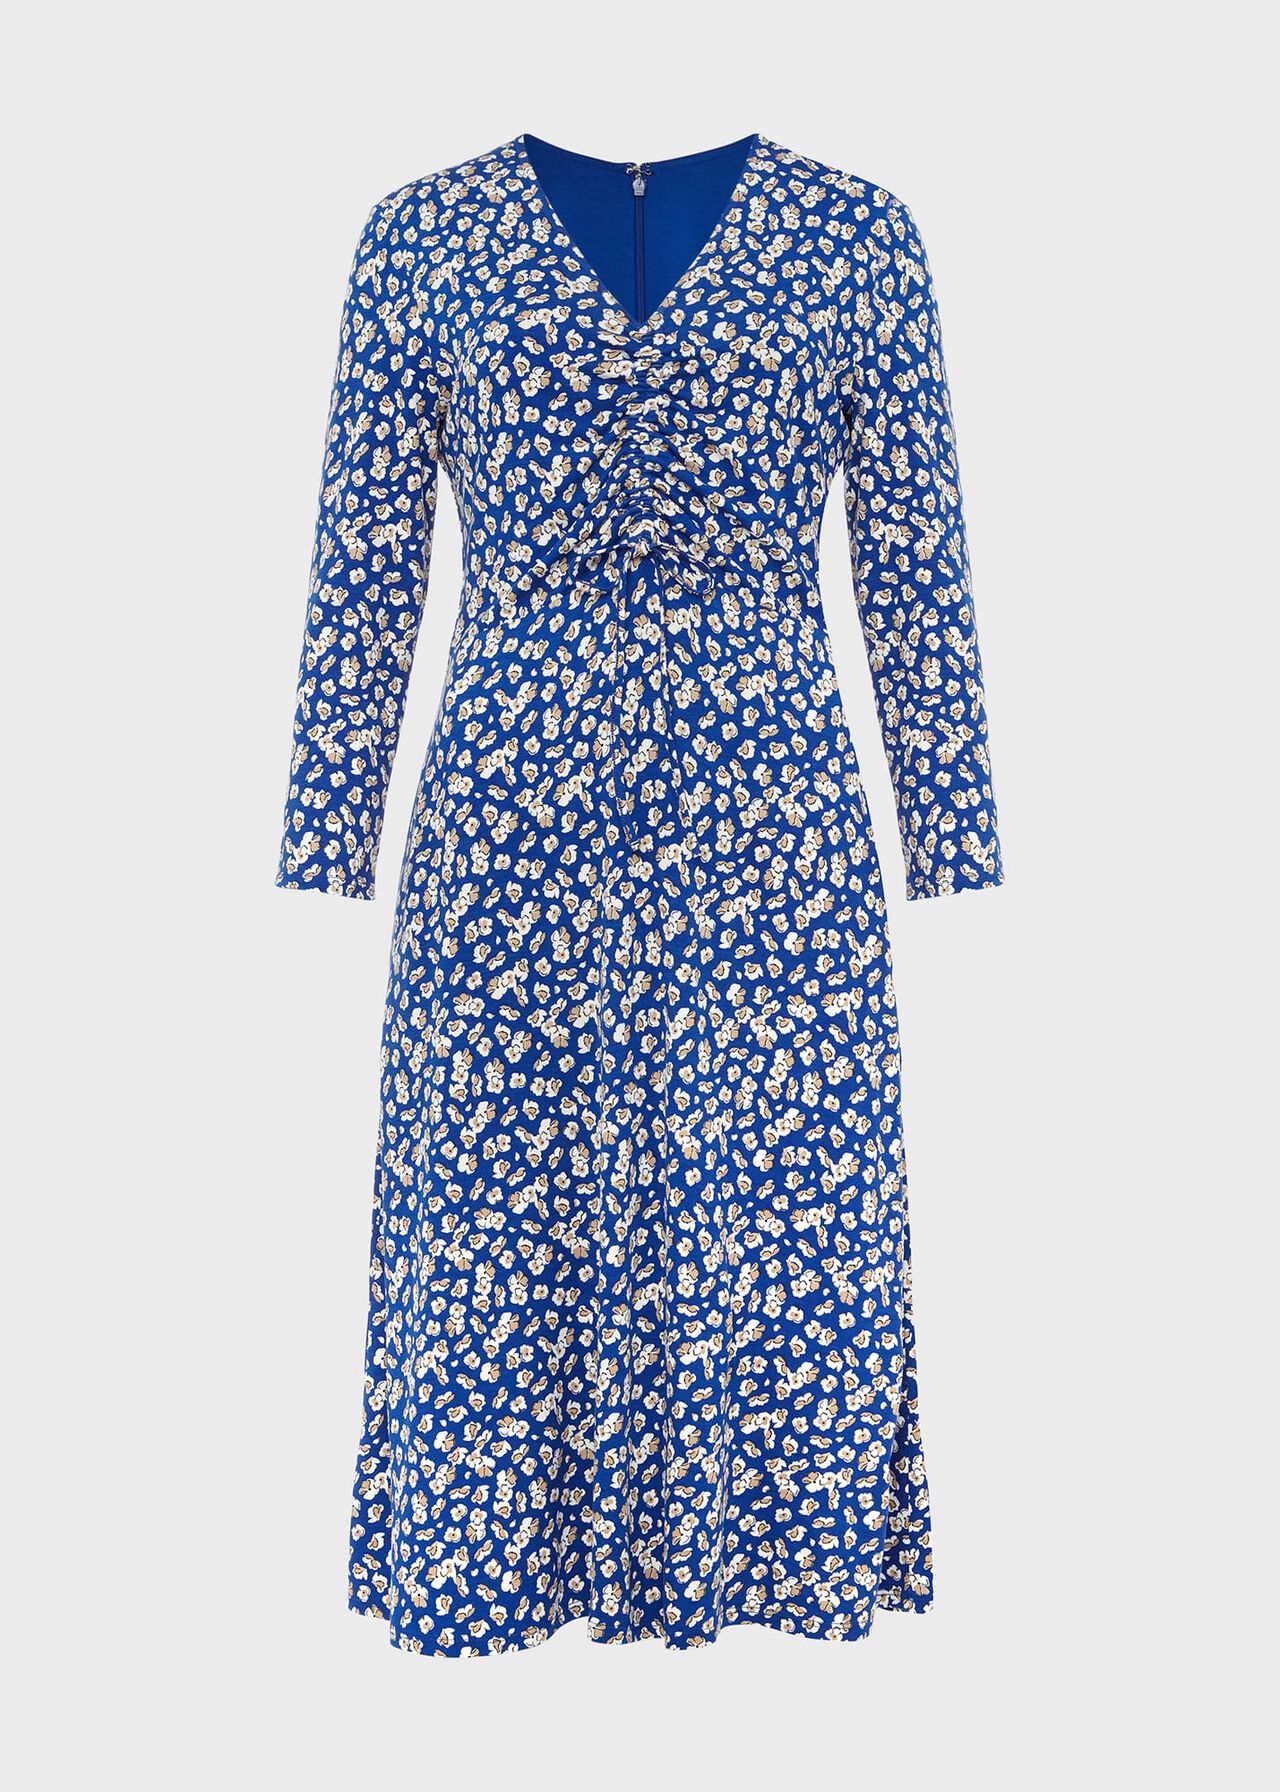 Simmy Floral Jersey Dress, Blue Multi, hi-res